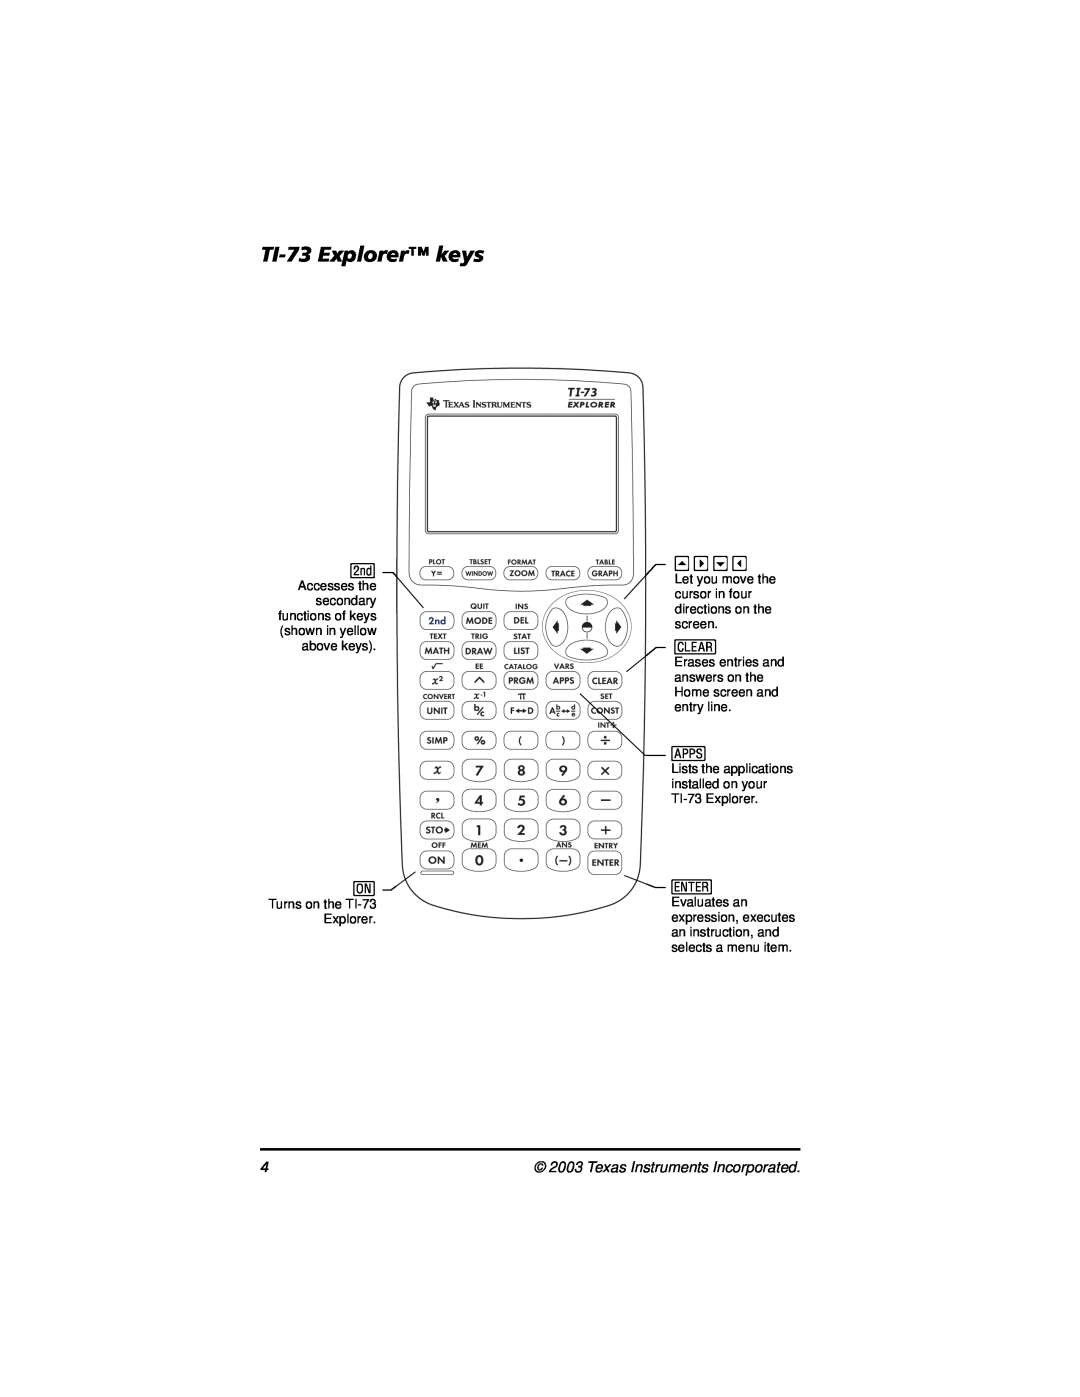 Texas Instruments CBL 2 manual TI-73 Explorer keys, Texas Instruments Incorporated, Turns on the TI-73 Explorer 